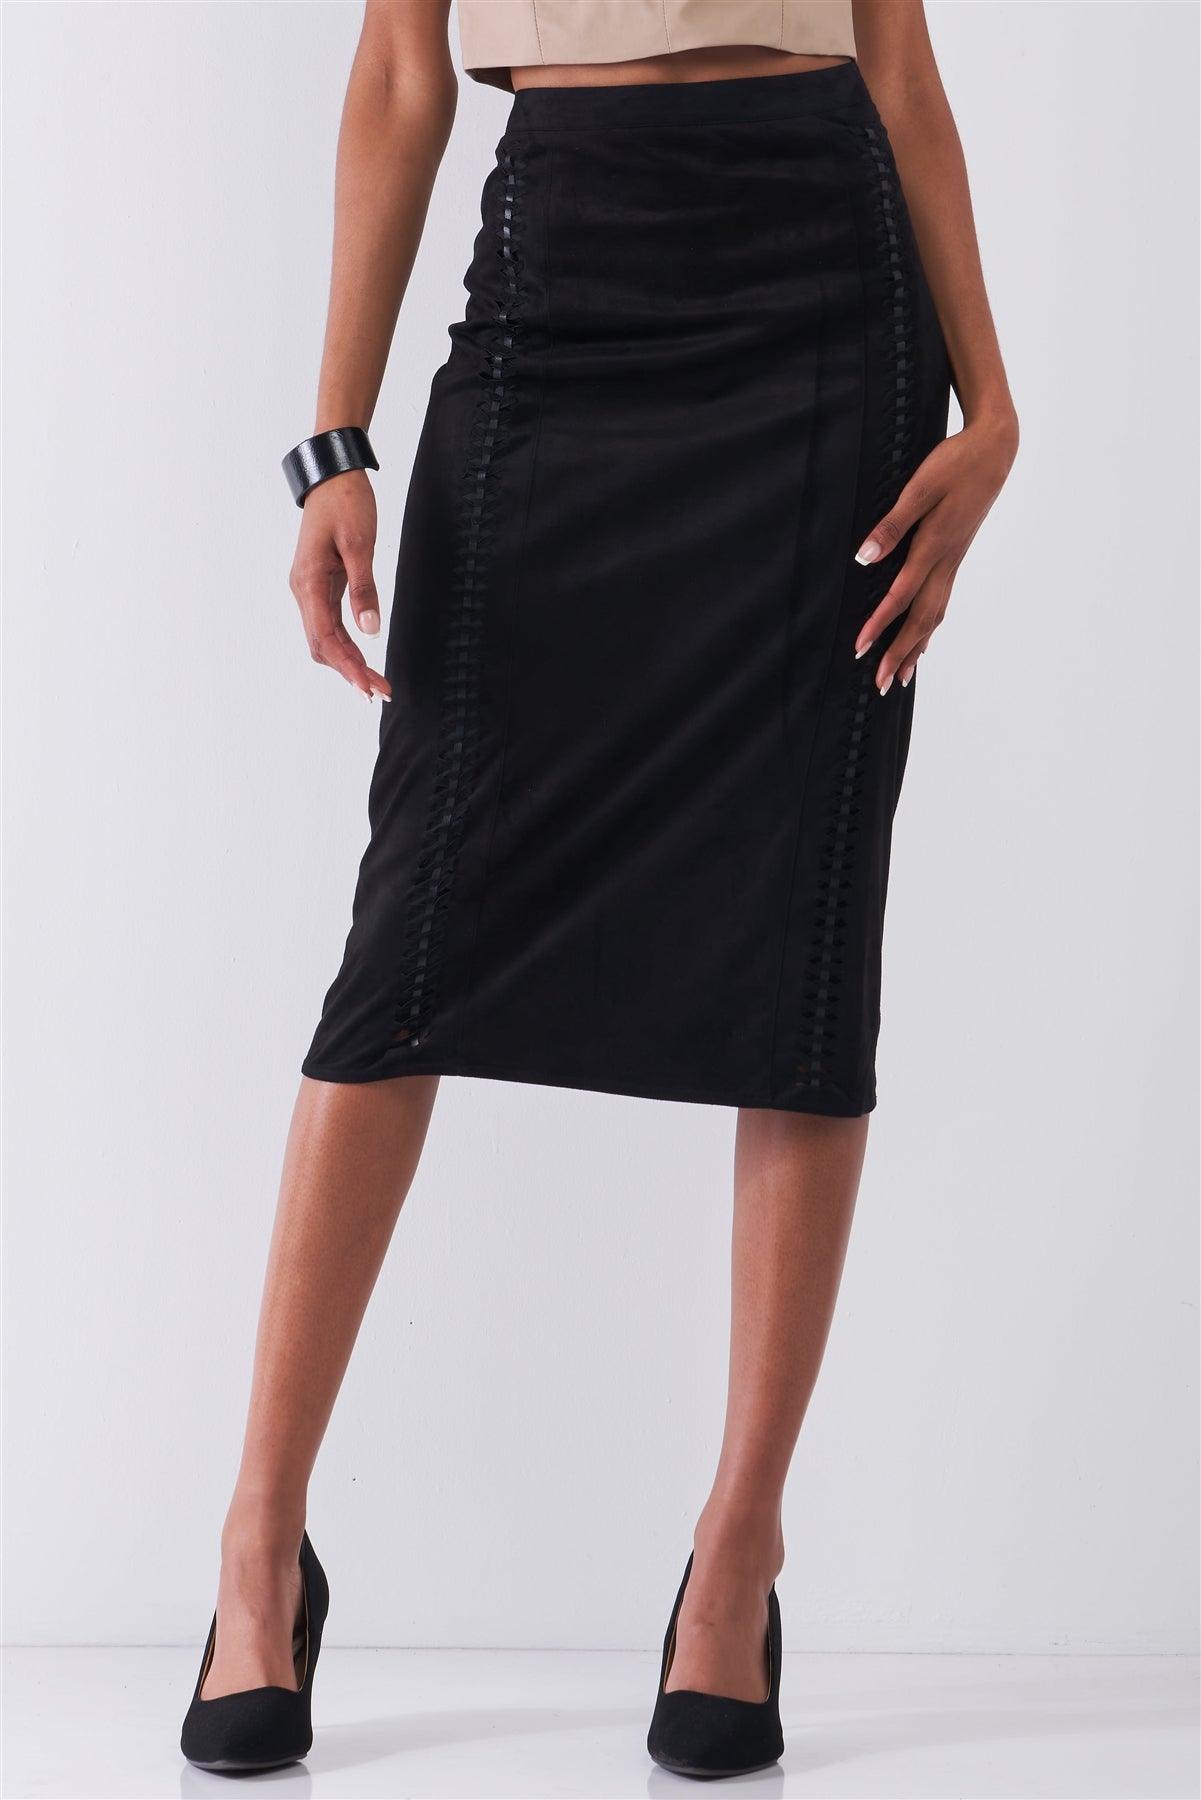 Black Suede High-Waist Side Trim Detail Pencil Fit Midi Skirt /1-2-2